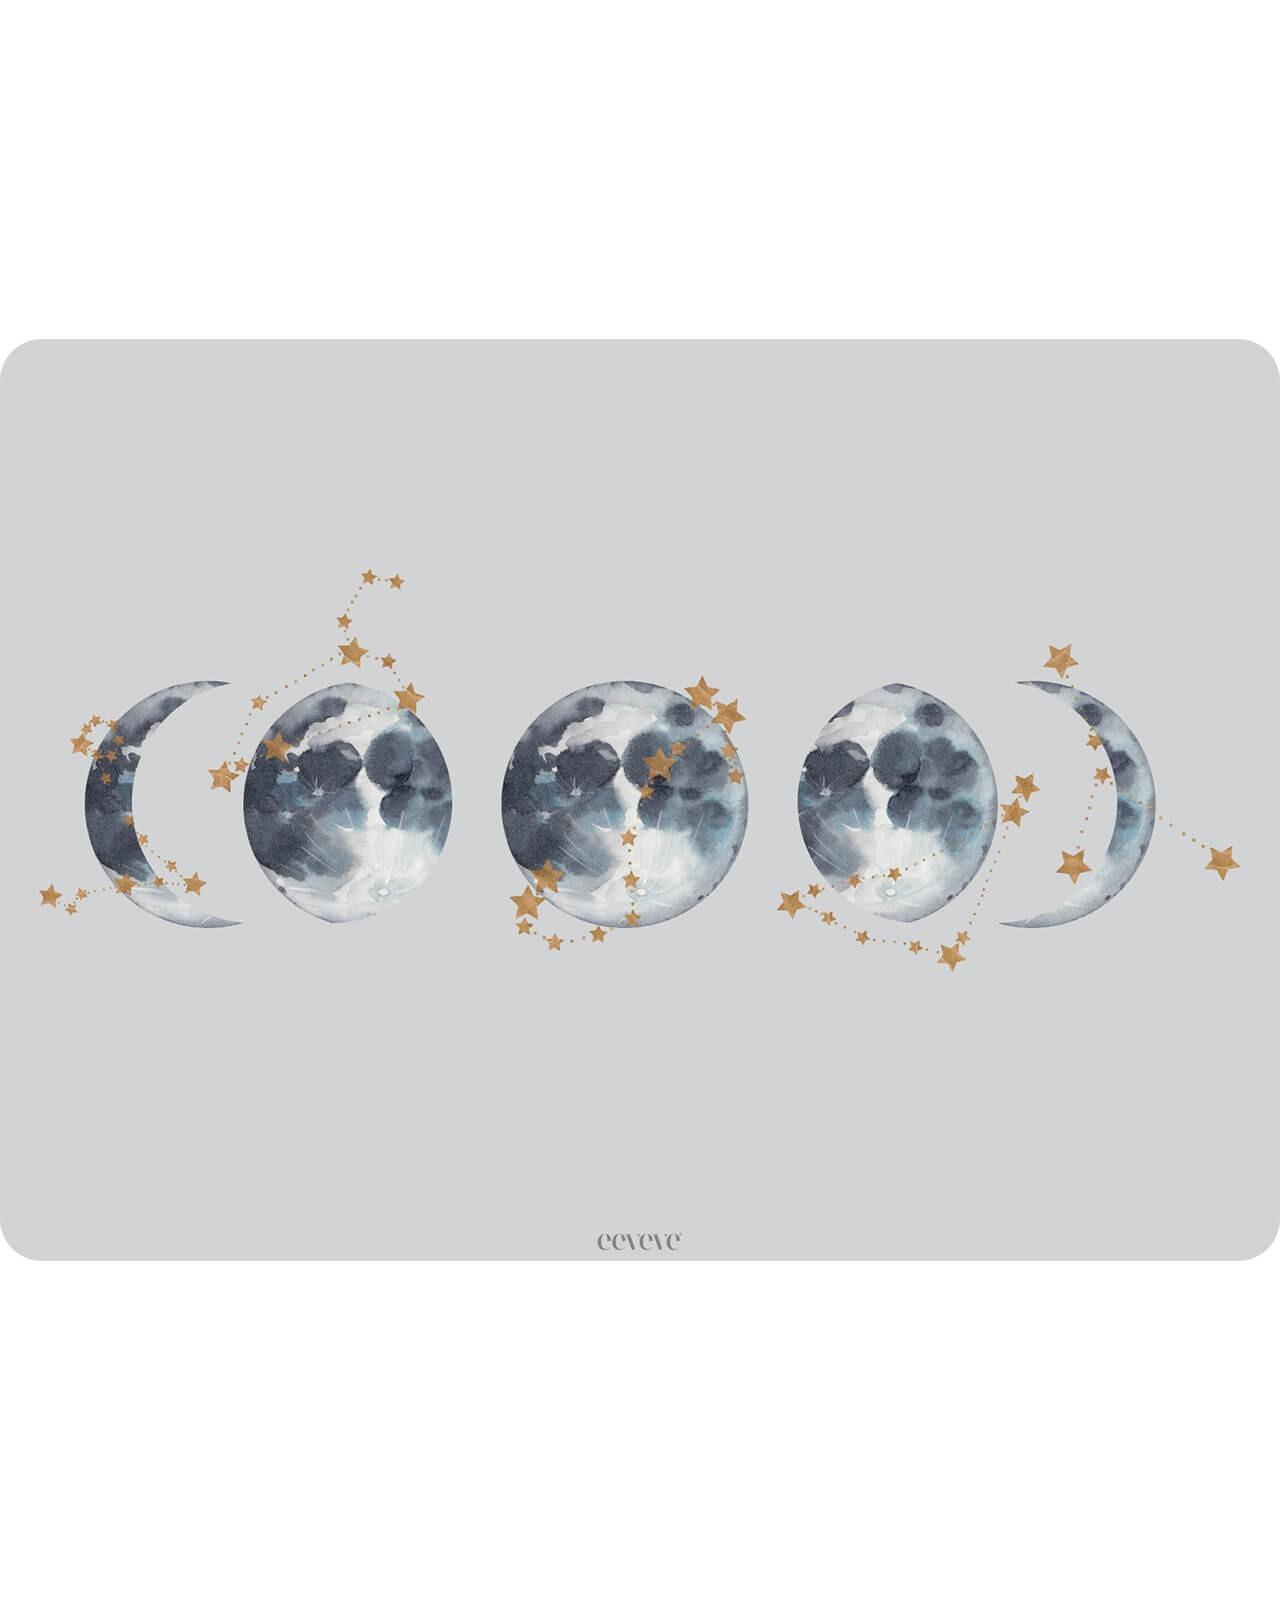 Eeveve - 6x Placemats Lunar Eclipse - Light gray